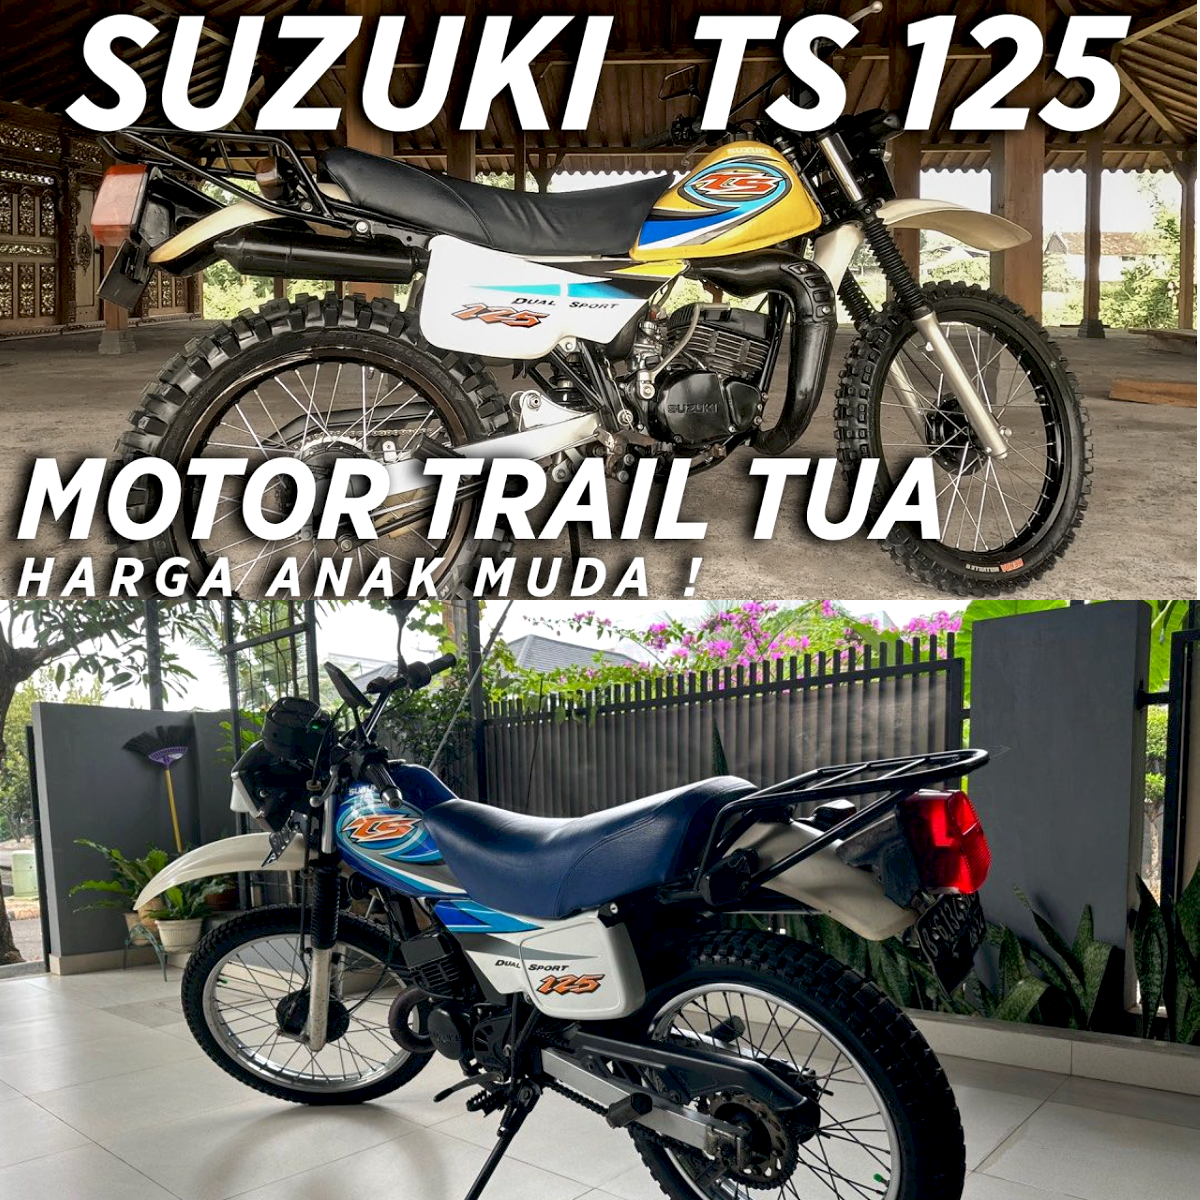 Mengungkap Misteri Legenda, Ayo Kenali Lebih Dekat Tentang Motor Suzuki TS 125!